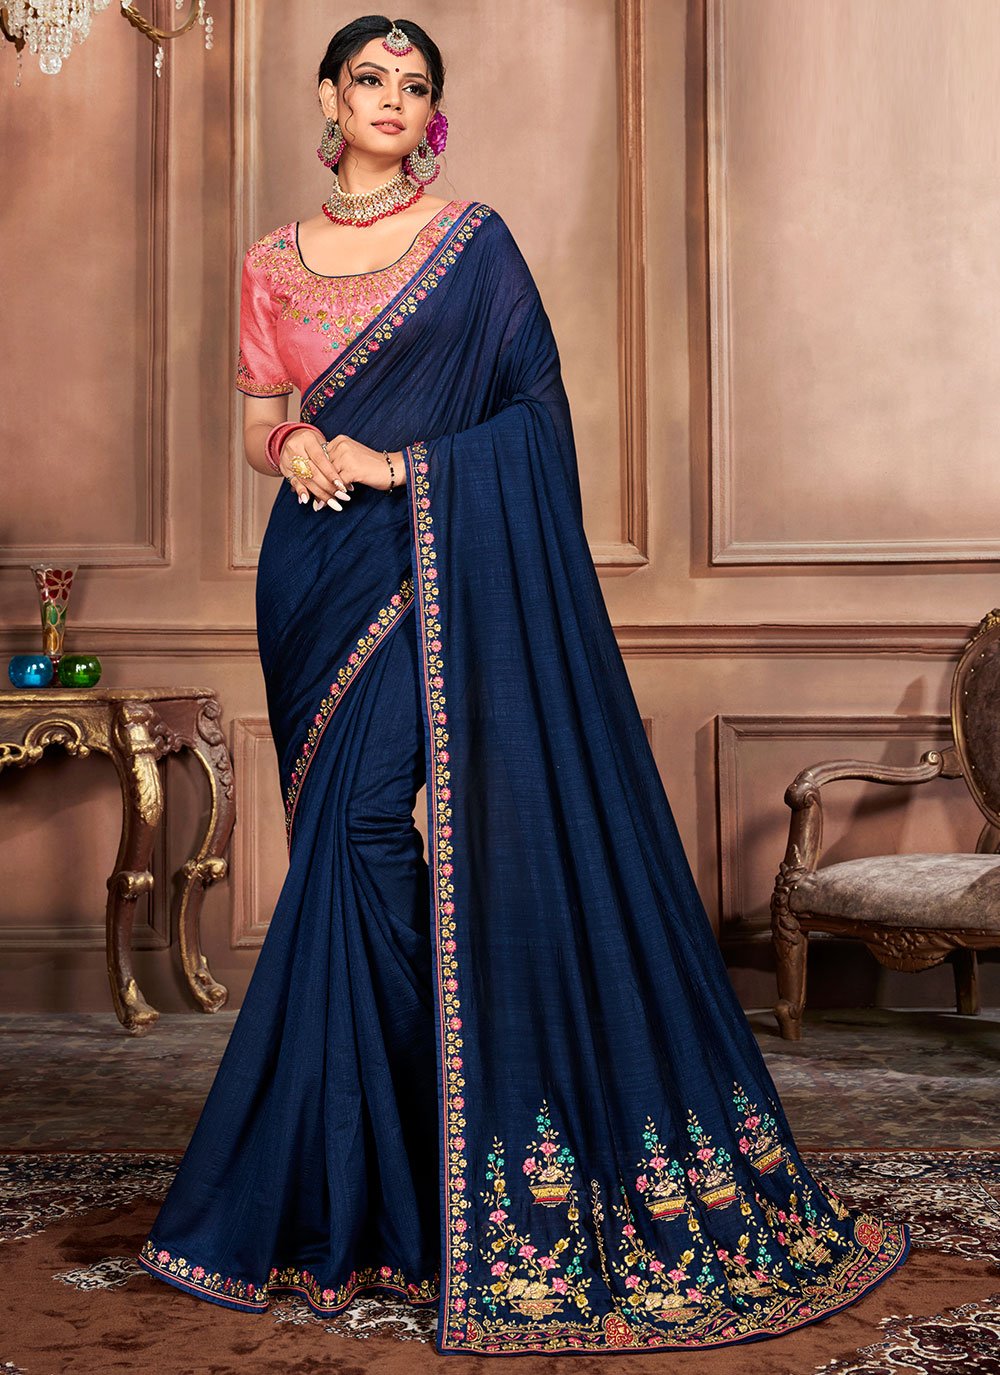 Blue and Red Embroidered Saree Indian Pakistani Ethnic Wedding Designer Sari